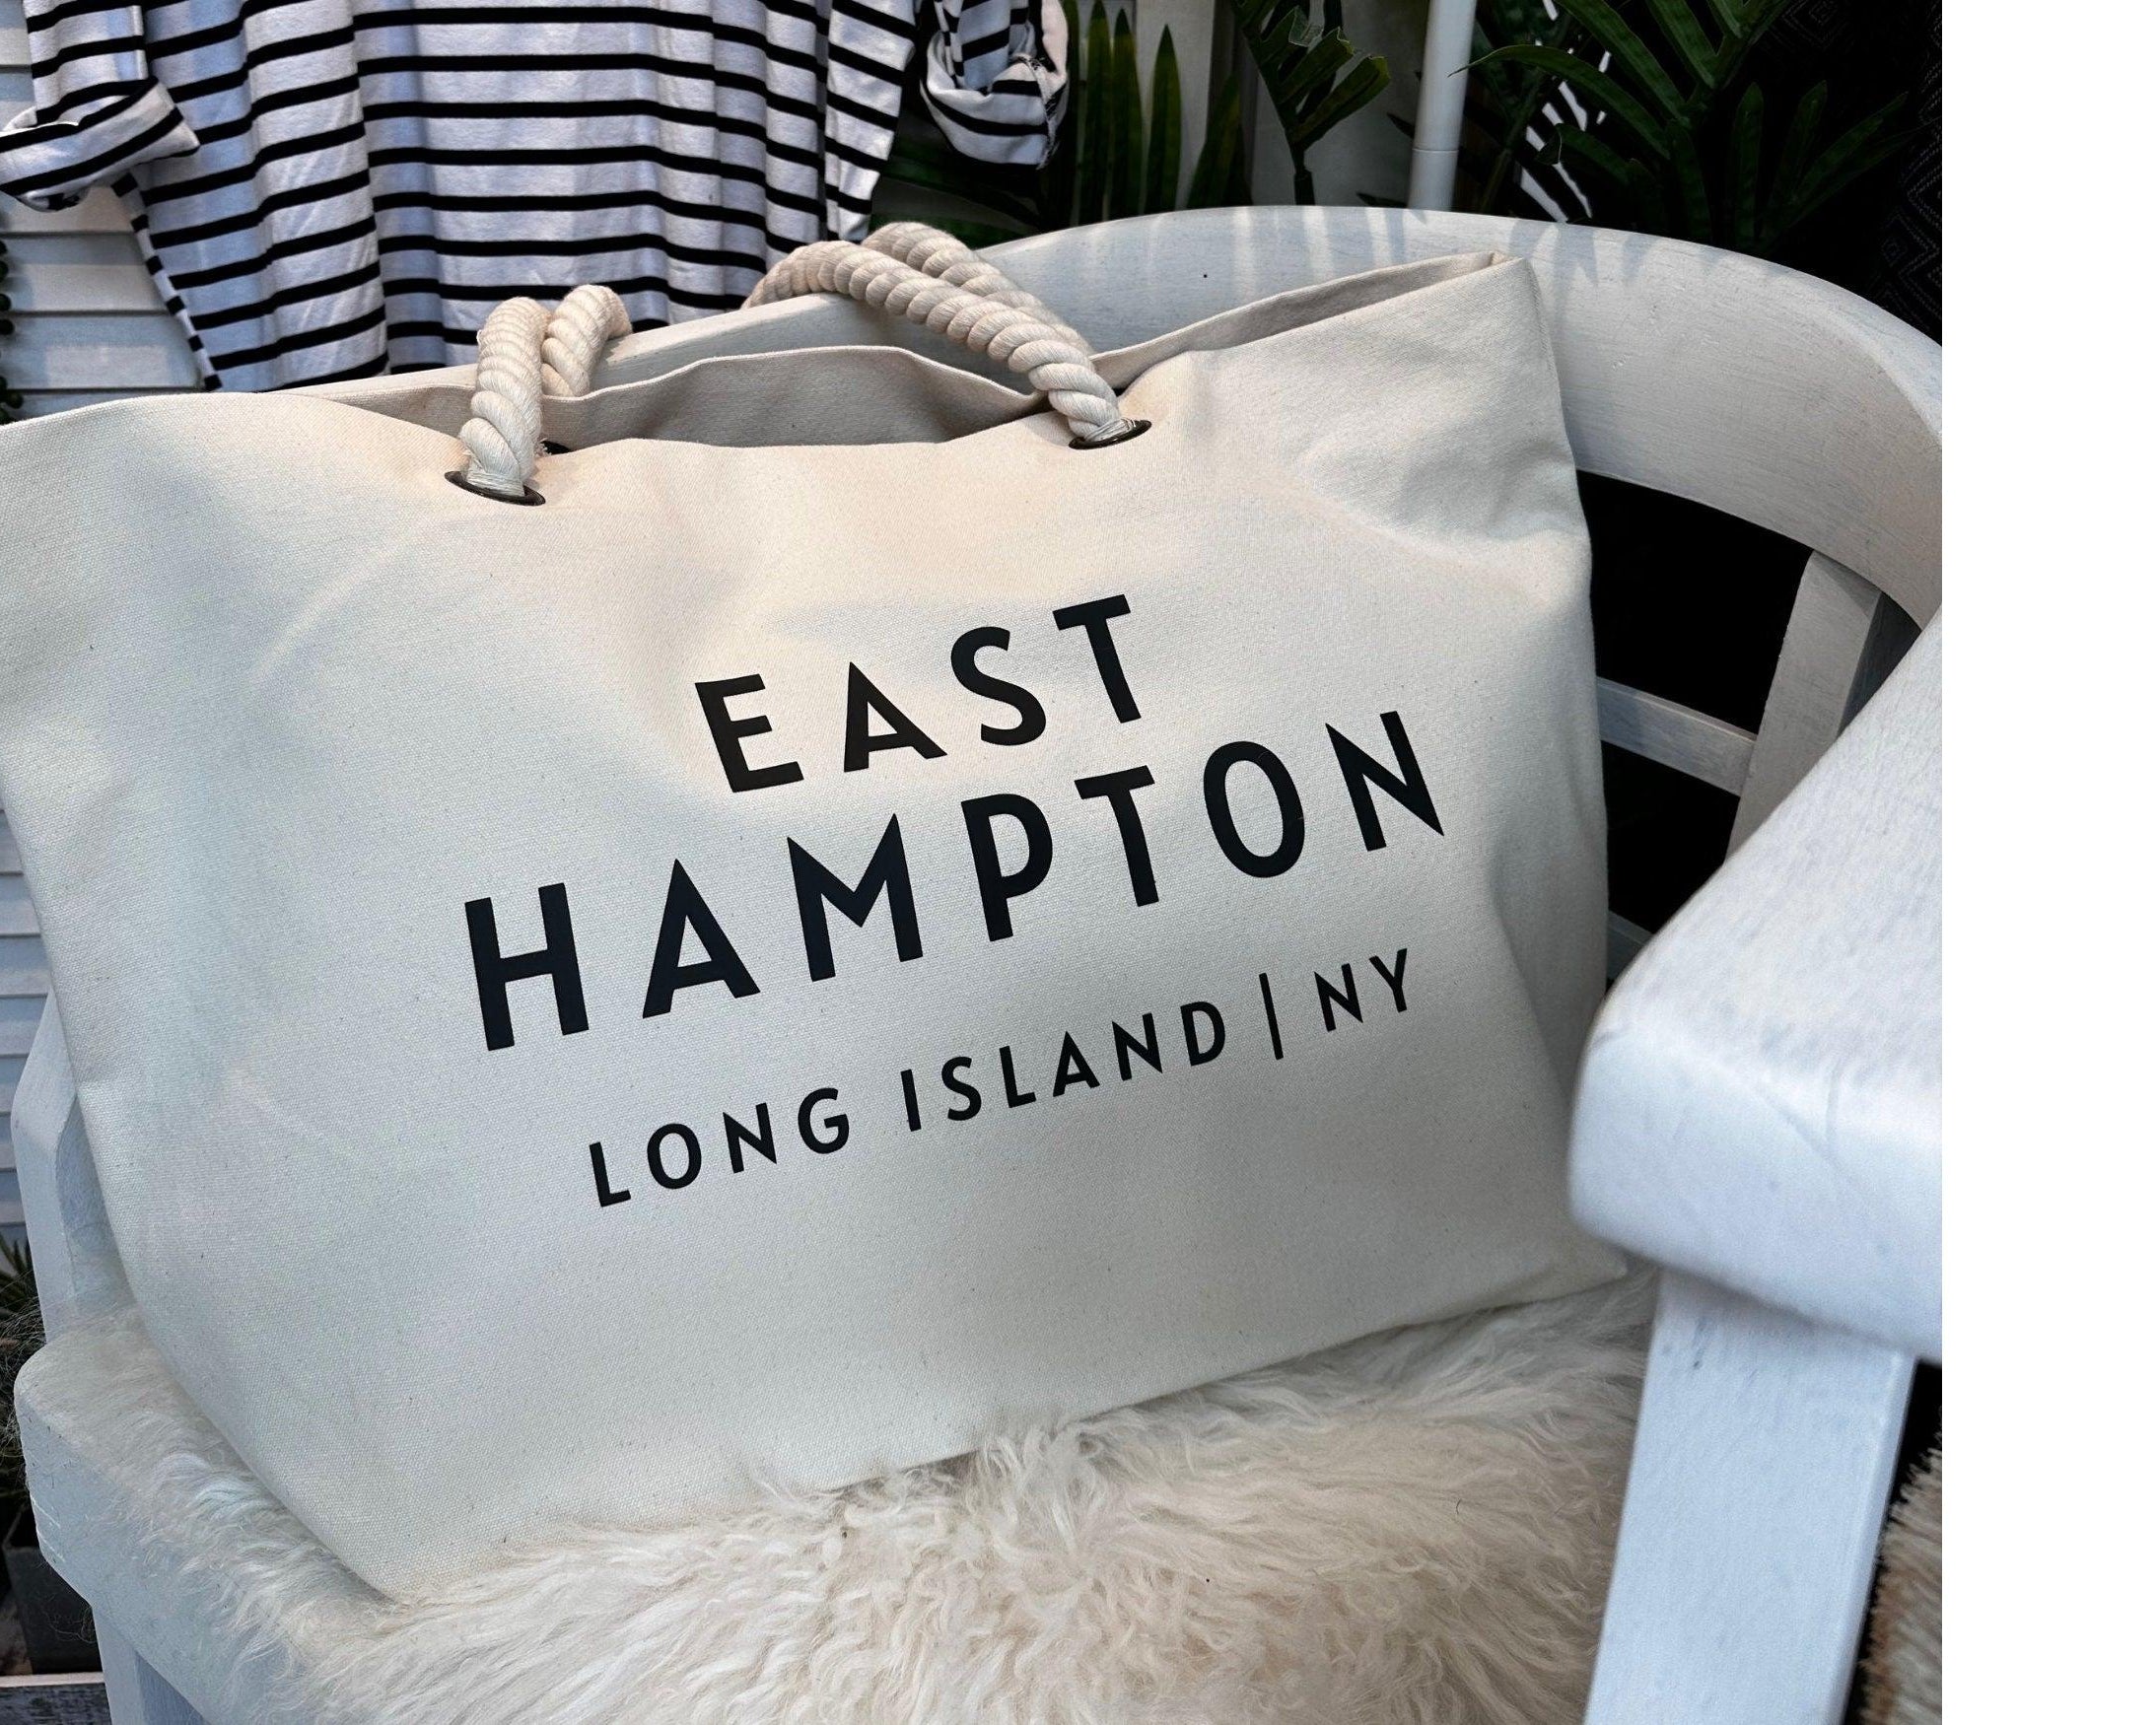 Tasche EAST HAMPTON | große Strandtasche | Shopper natur - Roo's Gift Shop